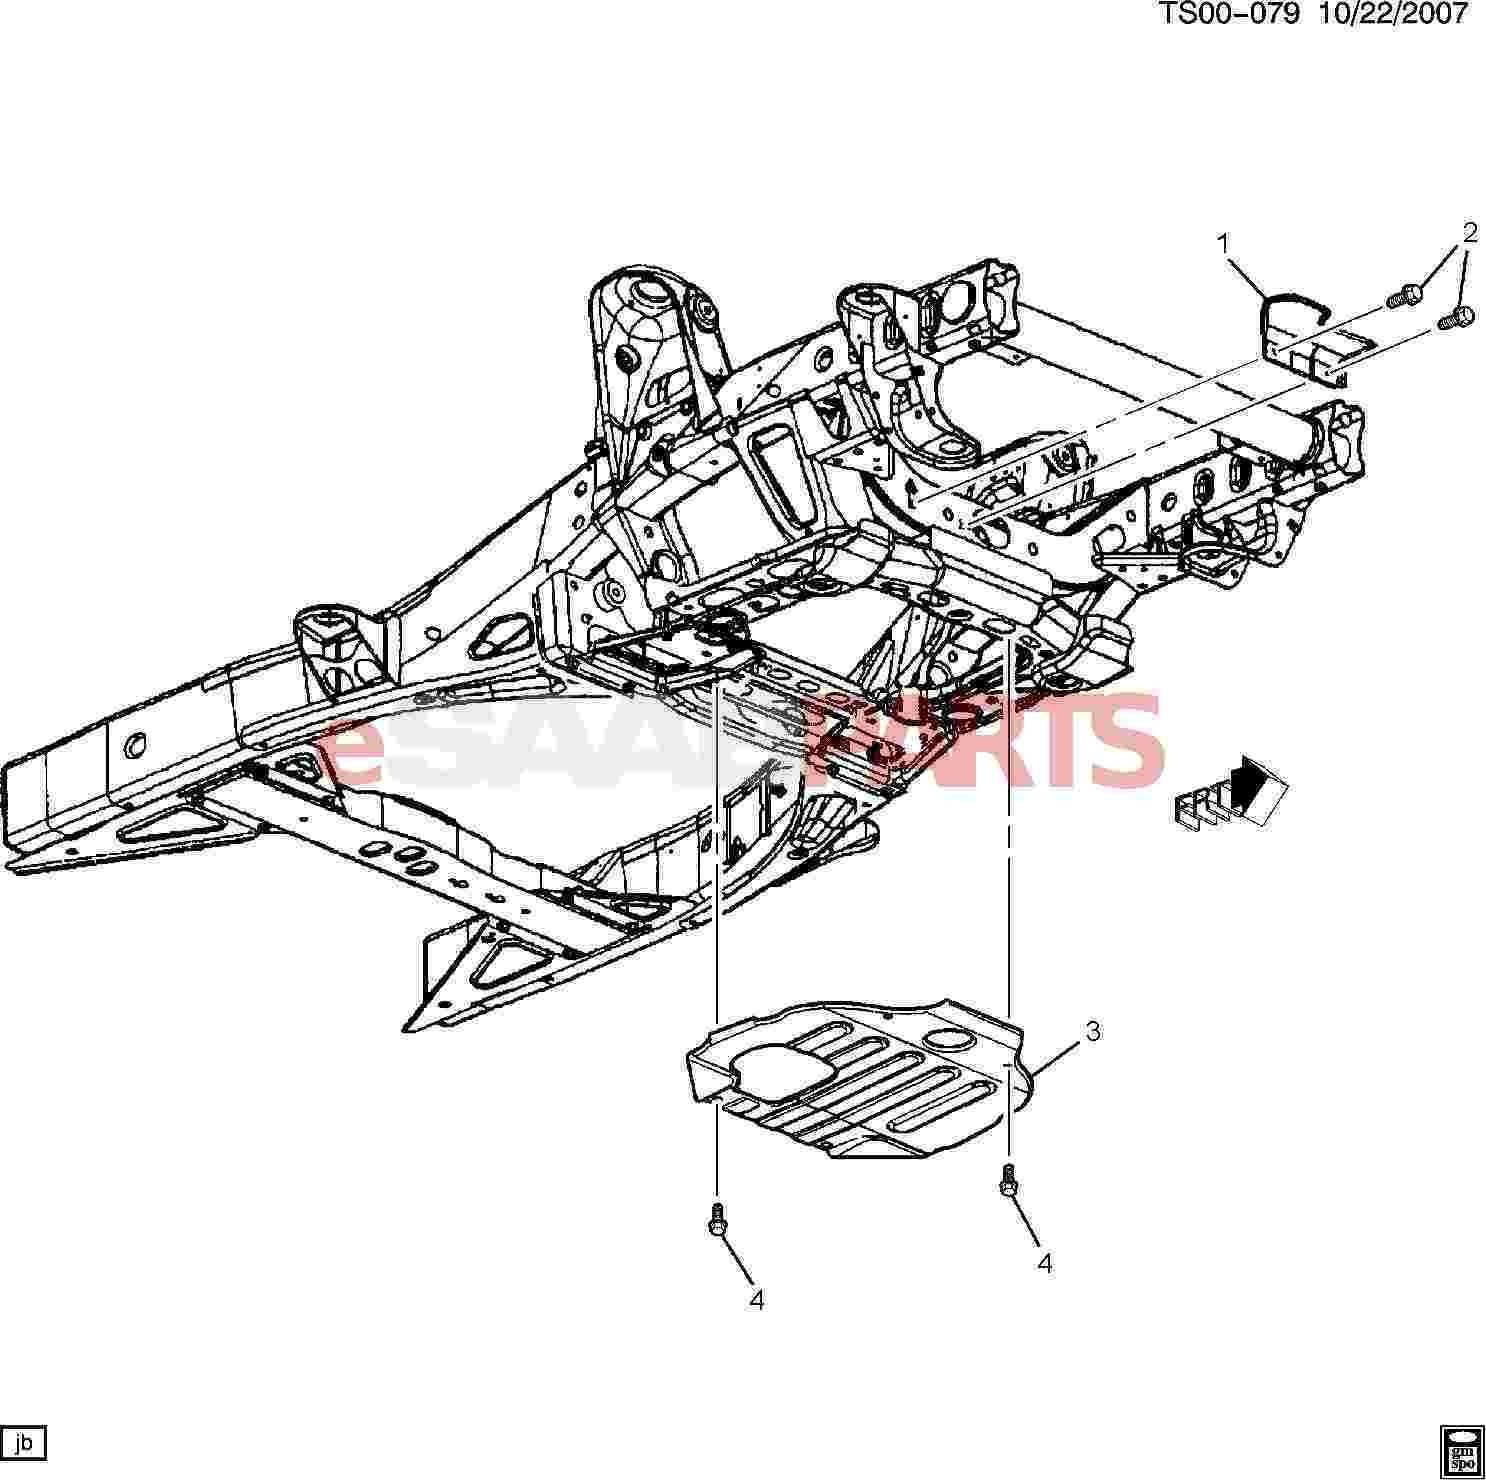 Detailed Diagram Of Car Parts Basic Diagram Car Parts ] Saab Bolt Hex with Con Wa M8x1 2530 20 Of Detailed Diagram Of Car Parts